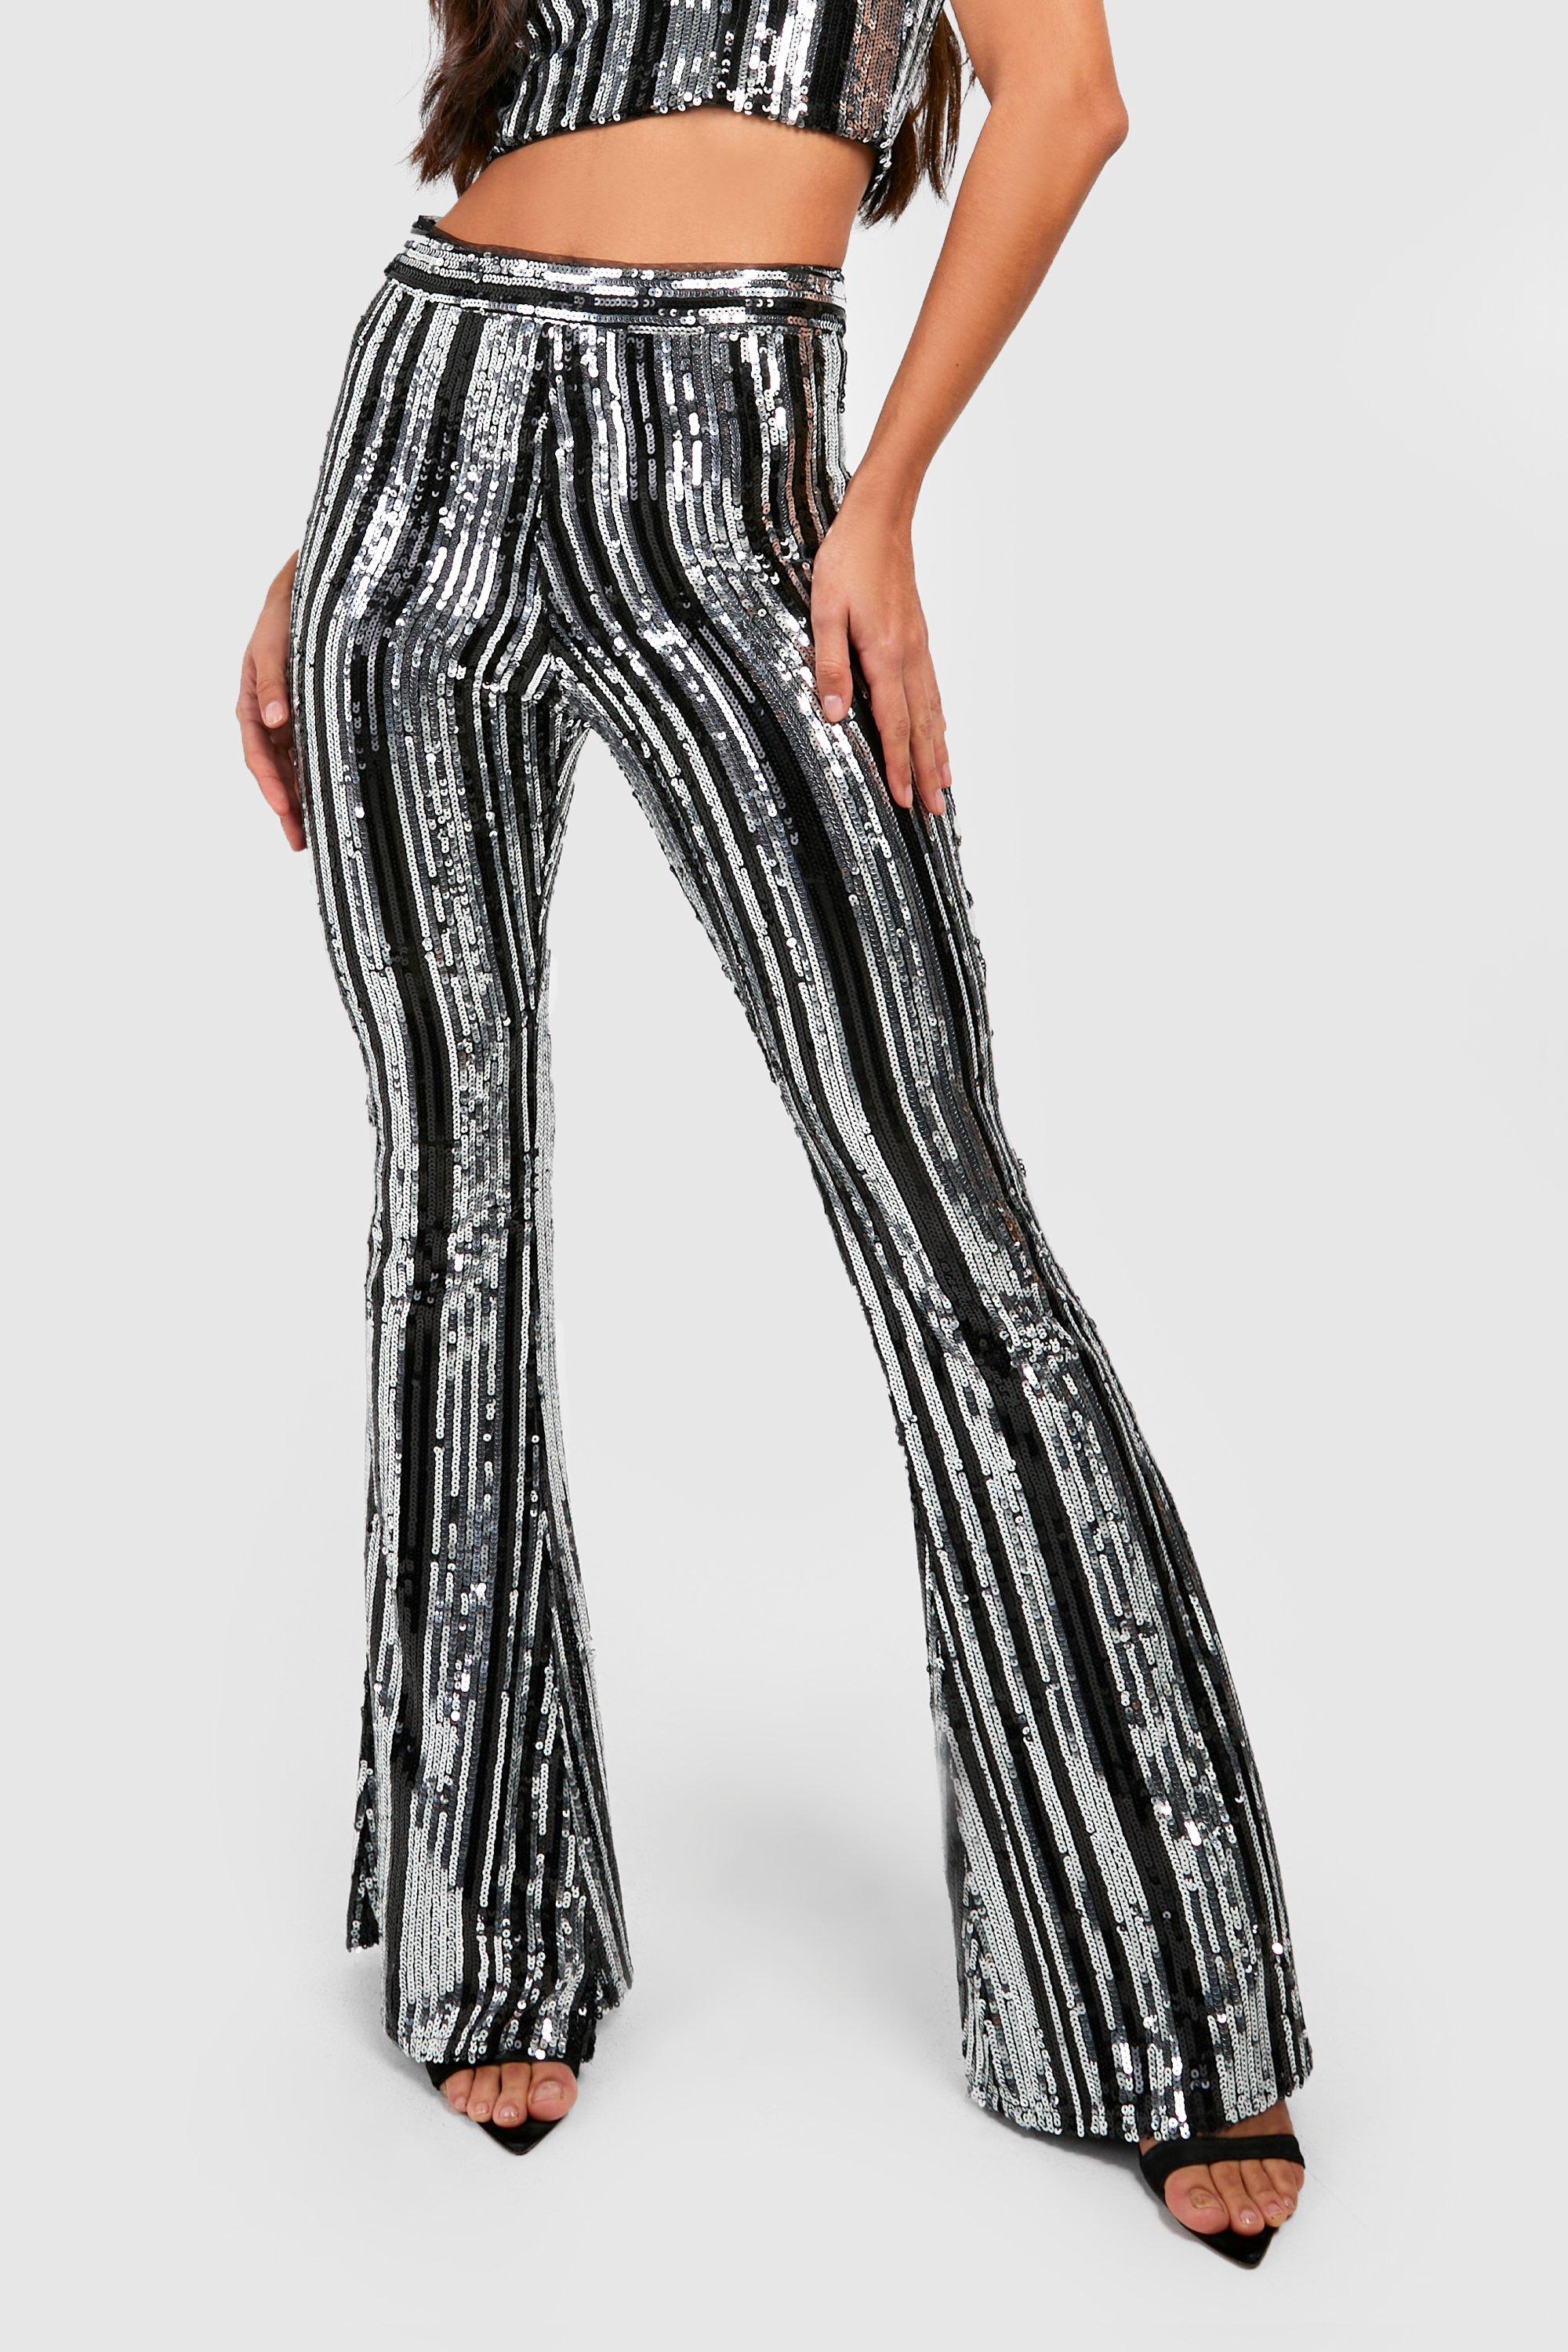 https://media.boohoo.com/i/boohoo/gzz26789_black_xl_3/female-black-tall-stripe-sequin-flare-trousers